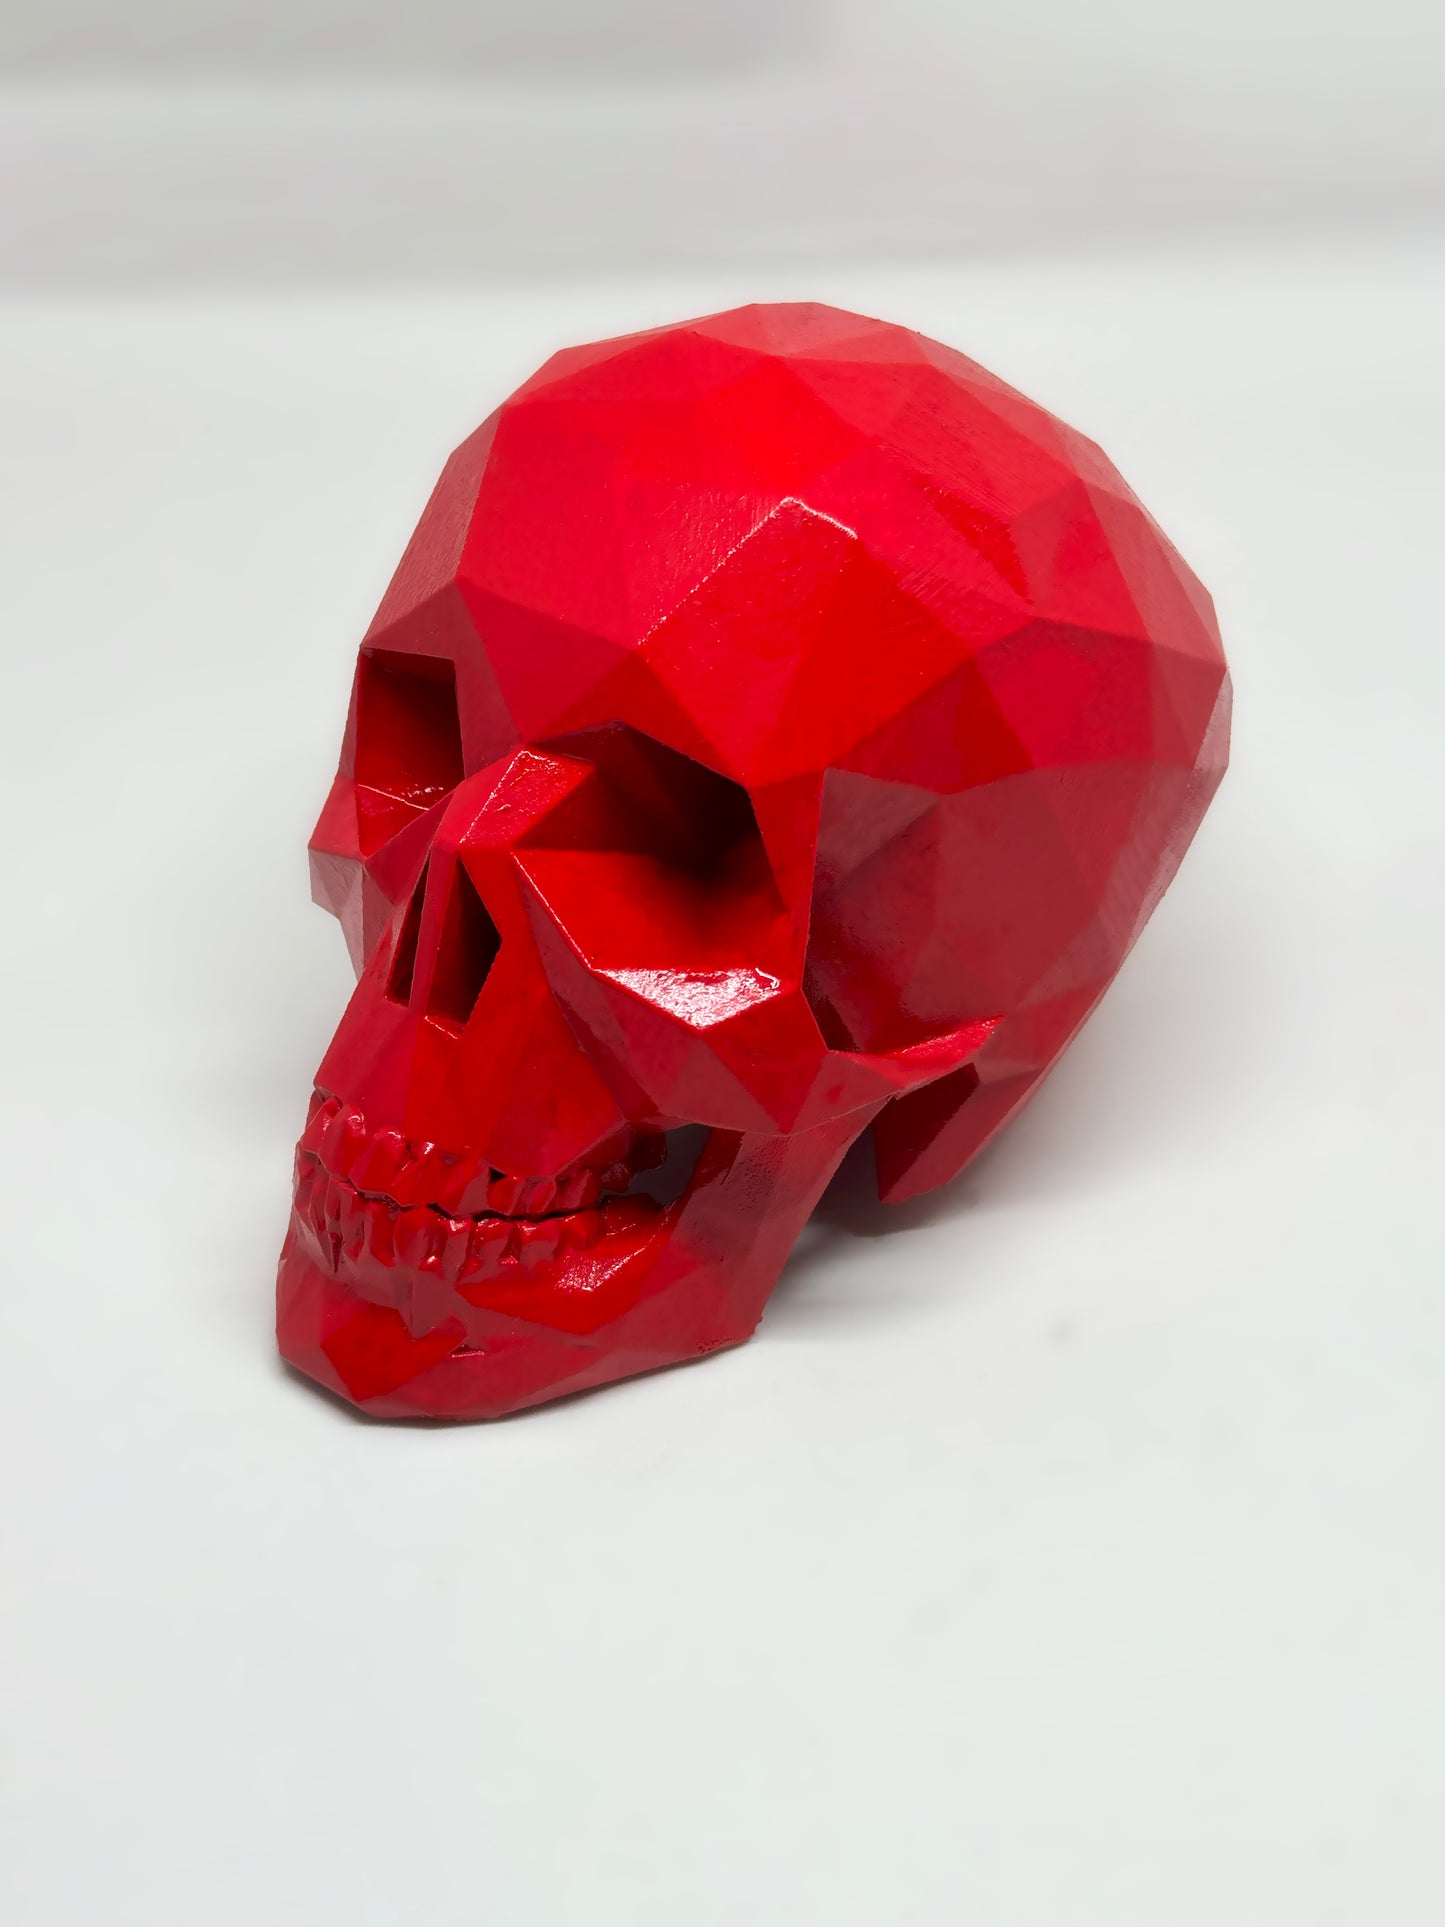 SCARLETT RED AFTERLIFE SKULL - 3D PRINTED SCULPTURE (1/13)